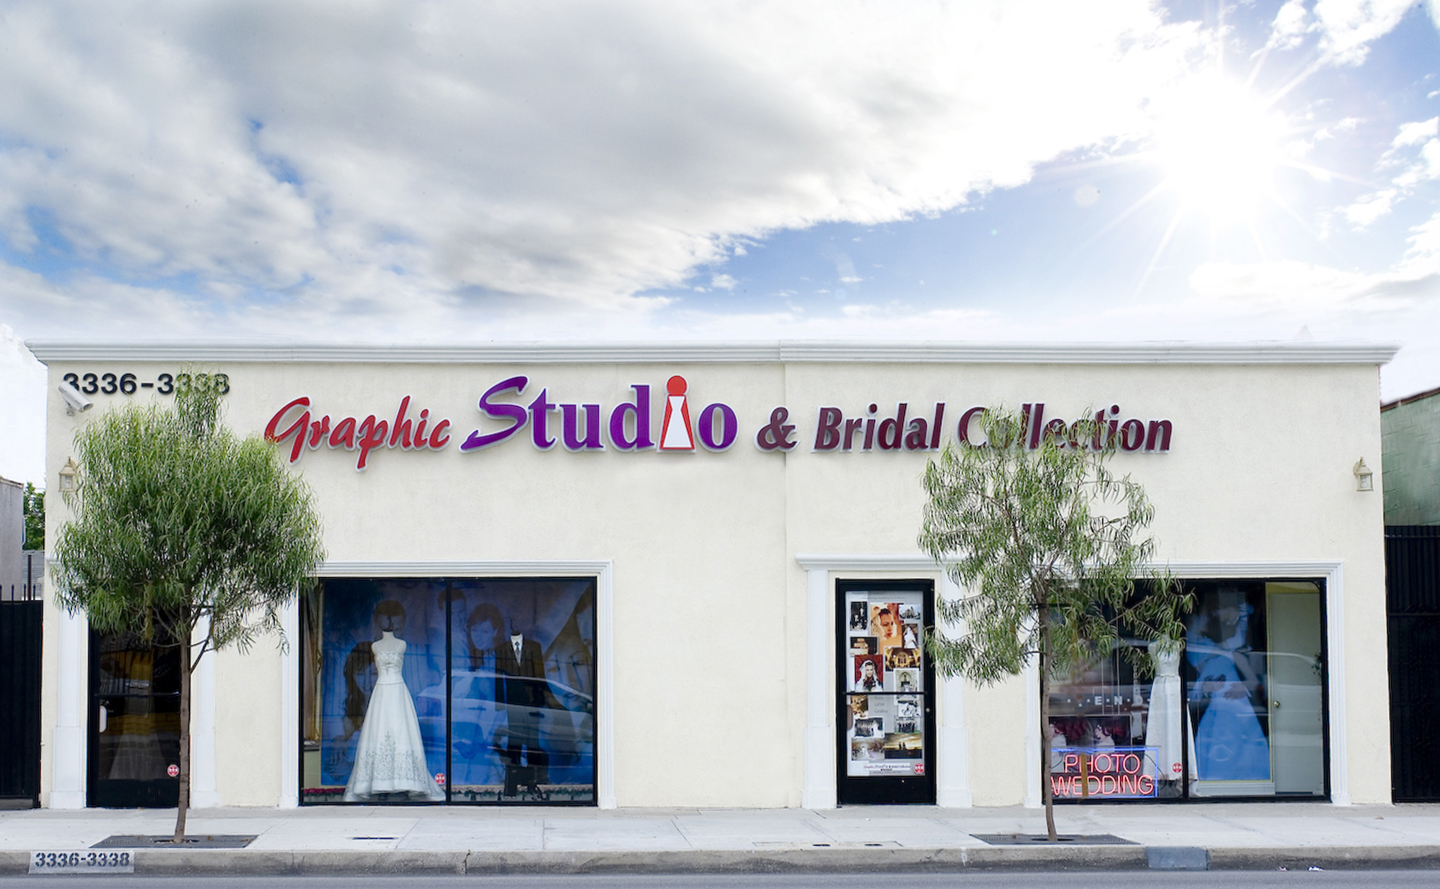 Graphic Studio & Bridal Collection